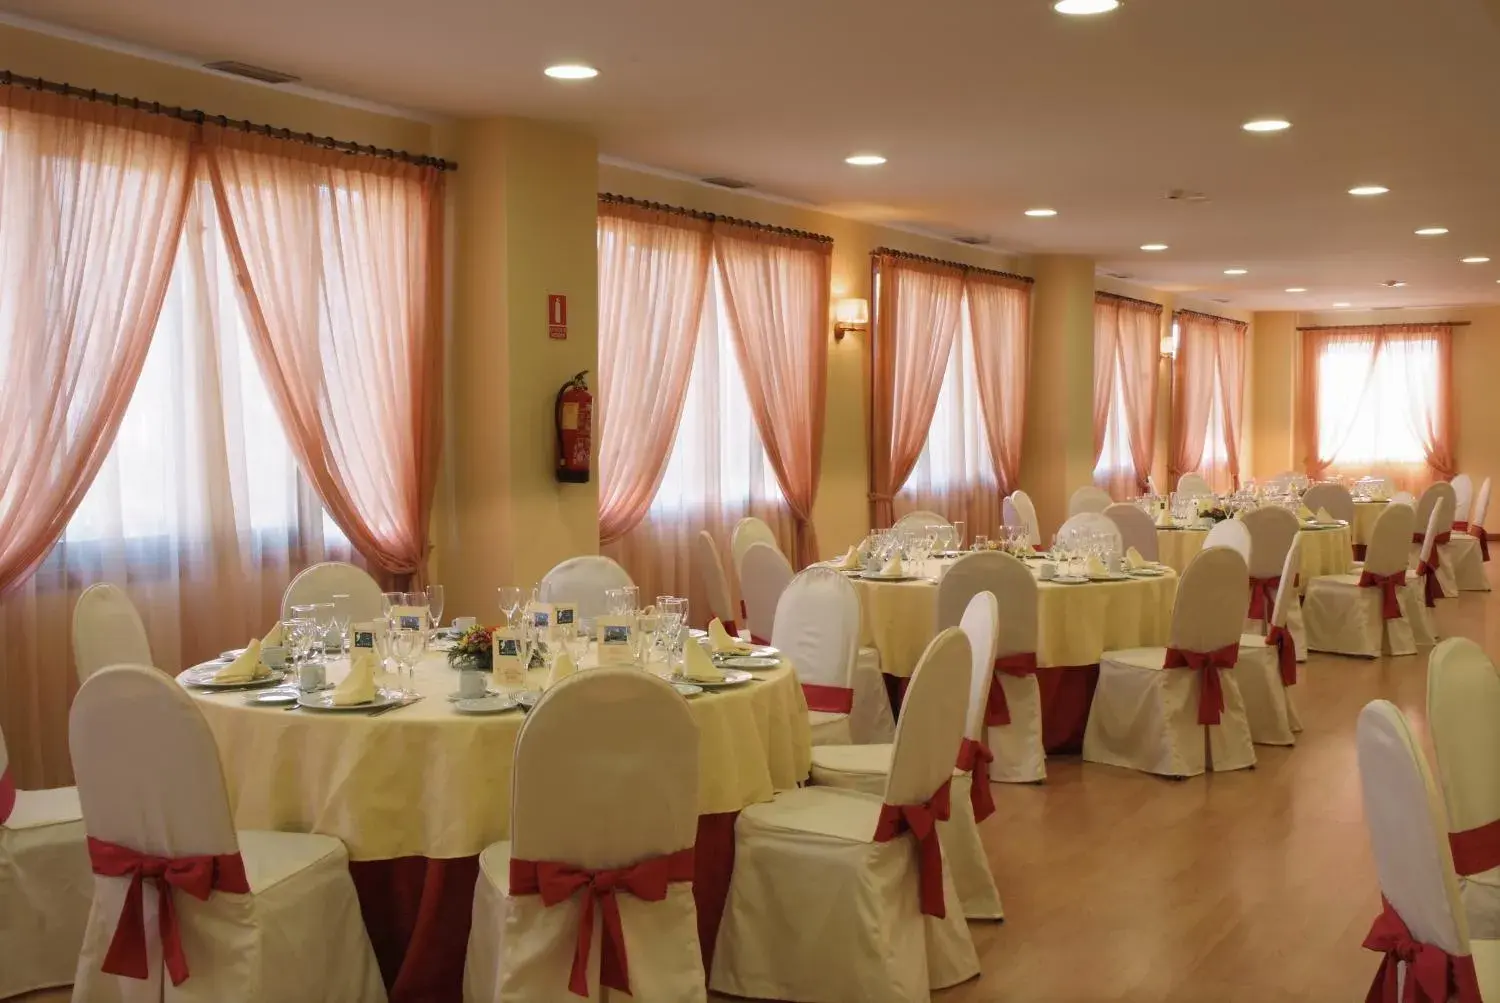 Restaurant/places to eat, Banquet Facilities in La Cañada